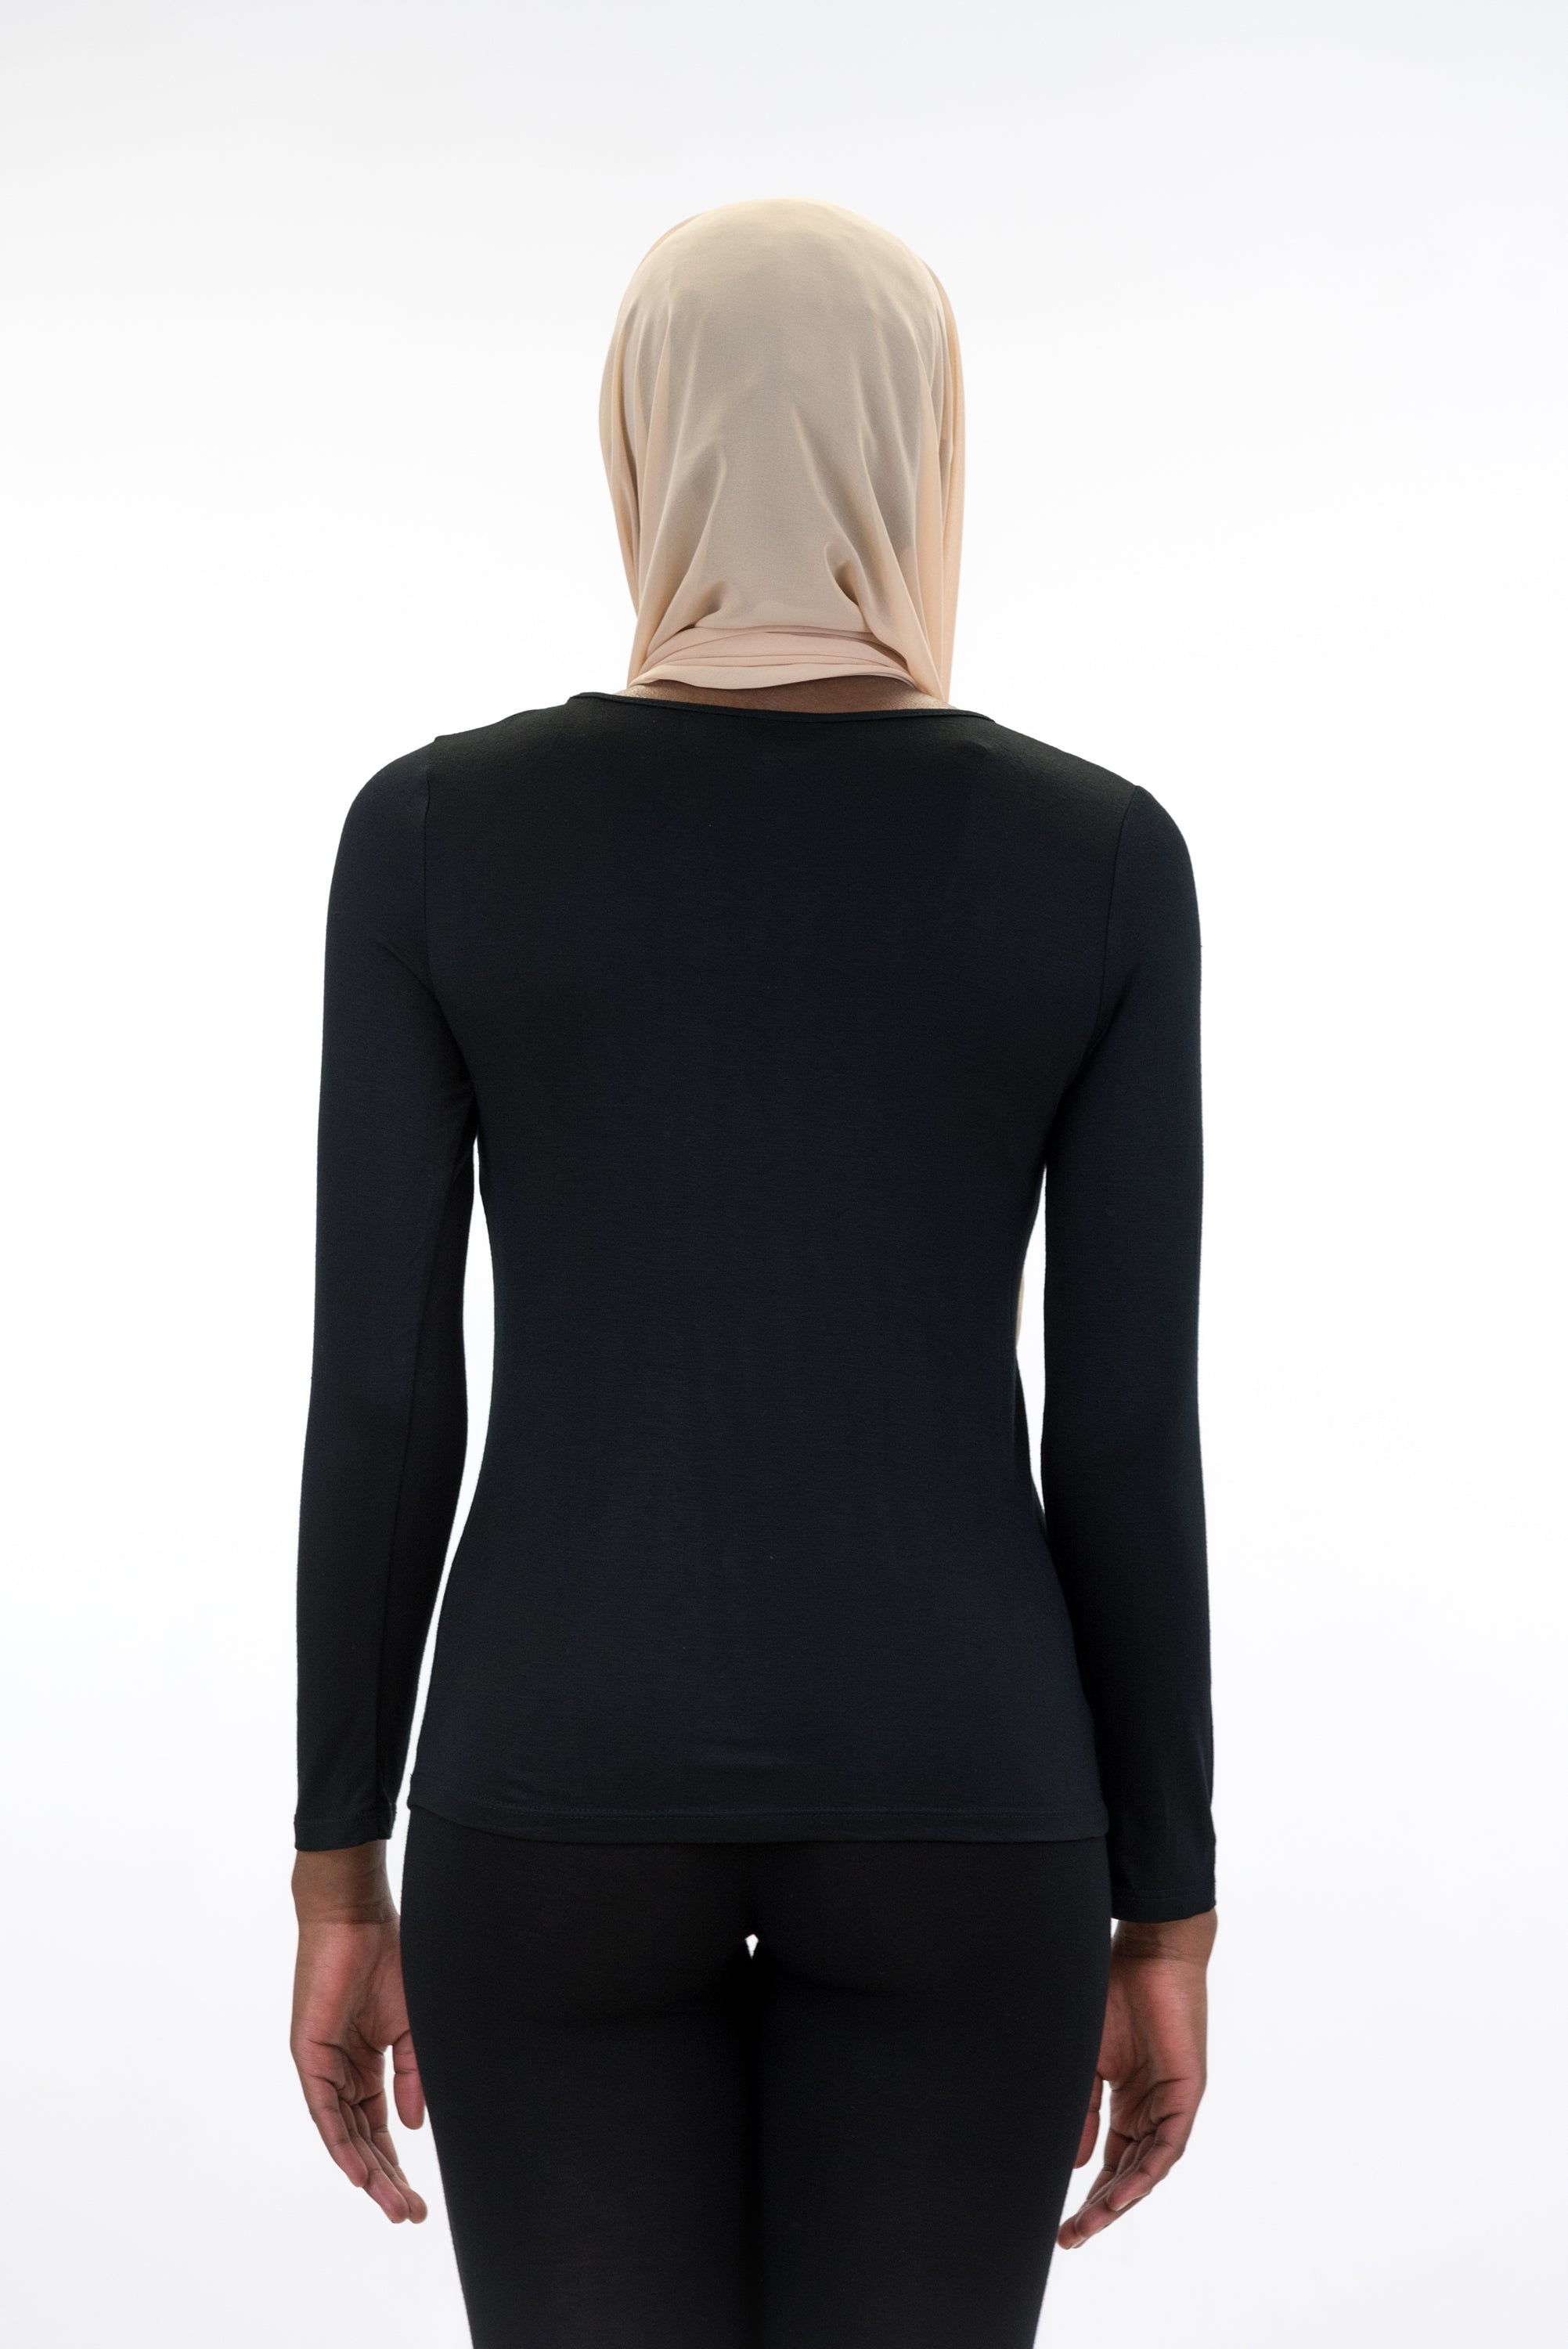 jolienisa Black Women's Basic Mock Neck  Fitted Long Sleeve Pullovers Tee Top